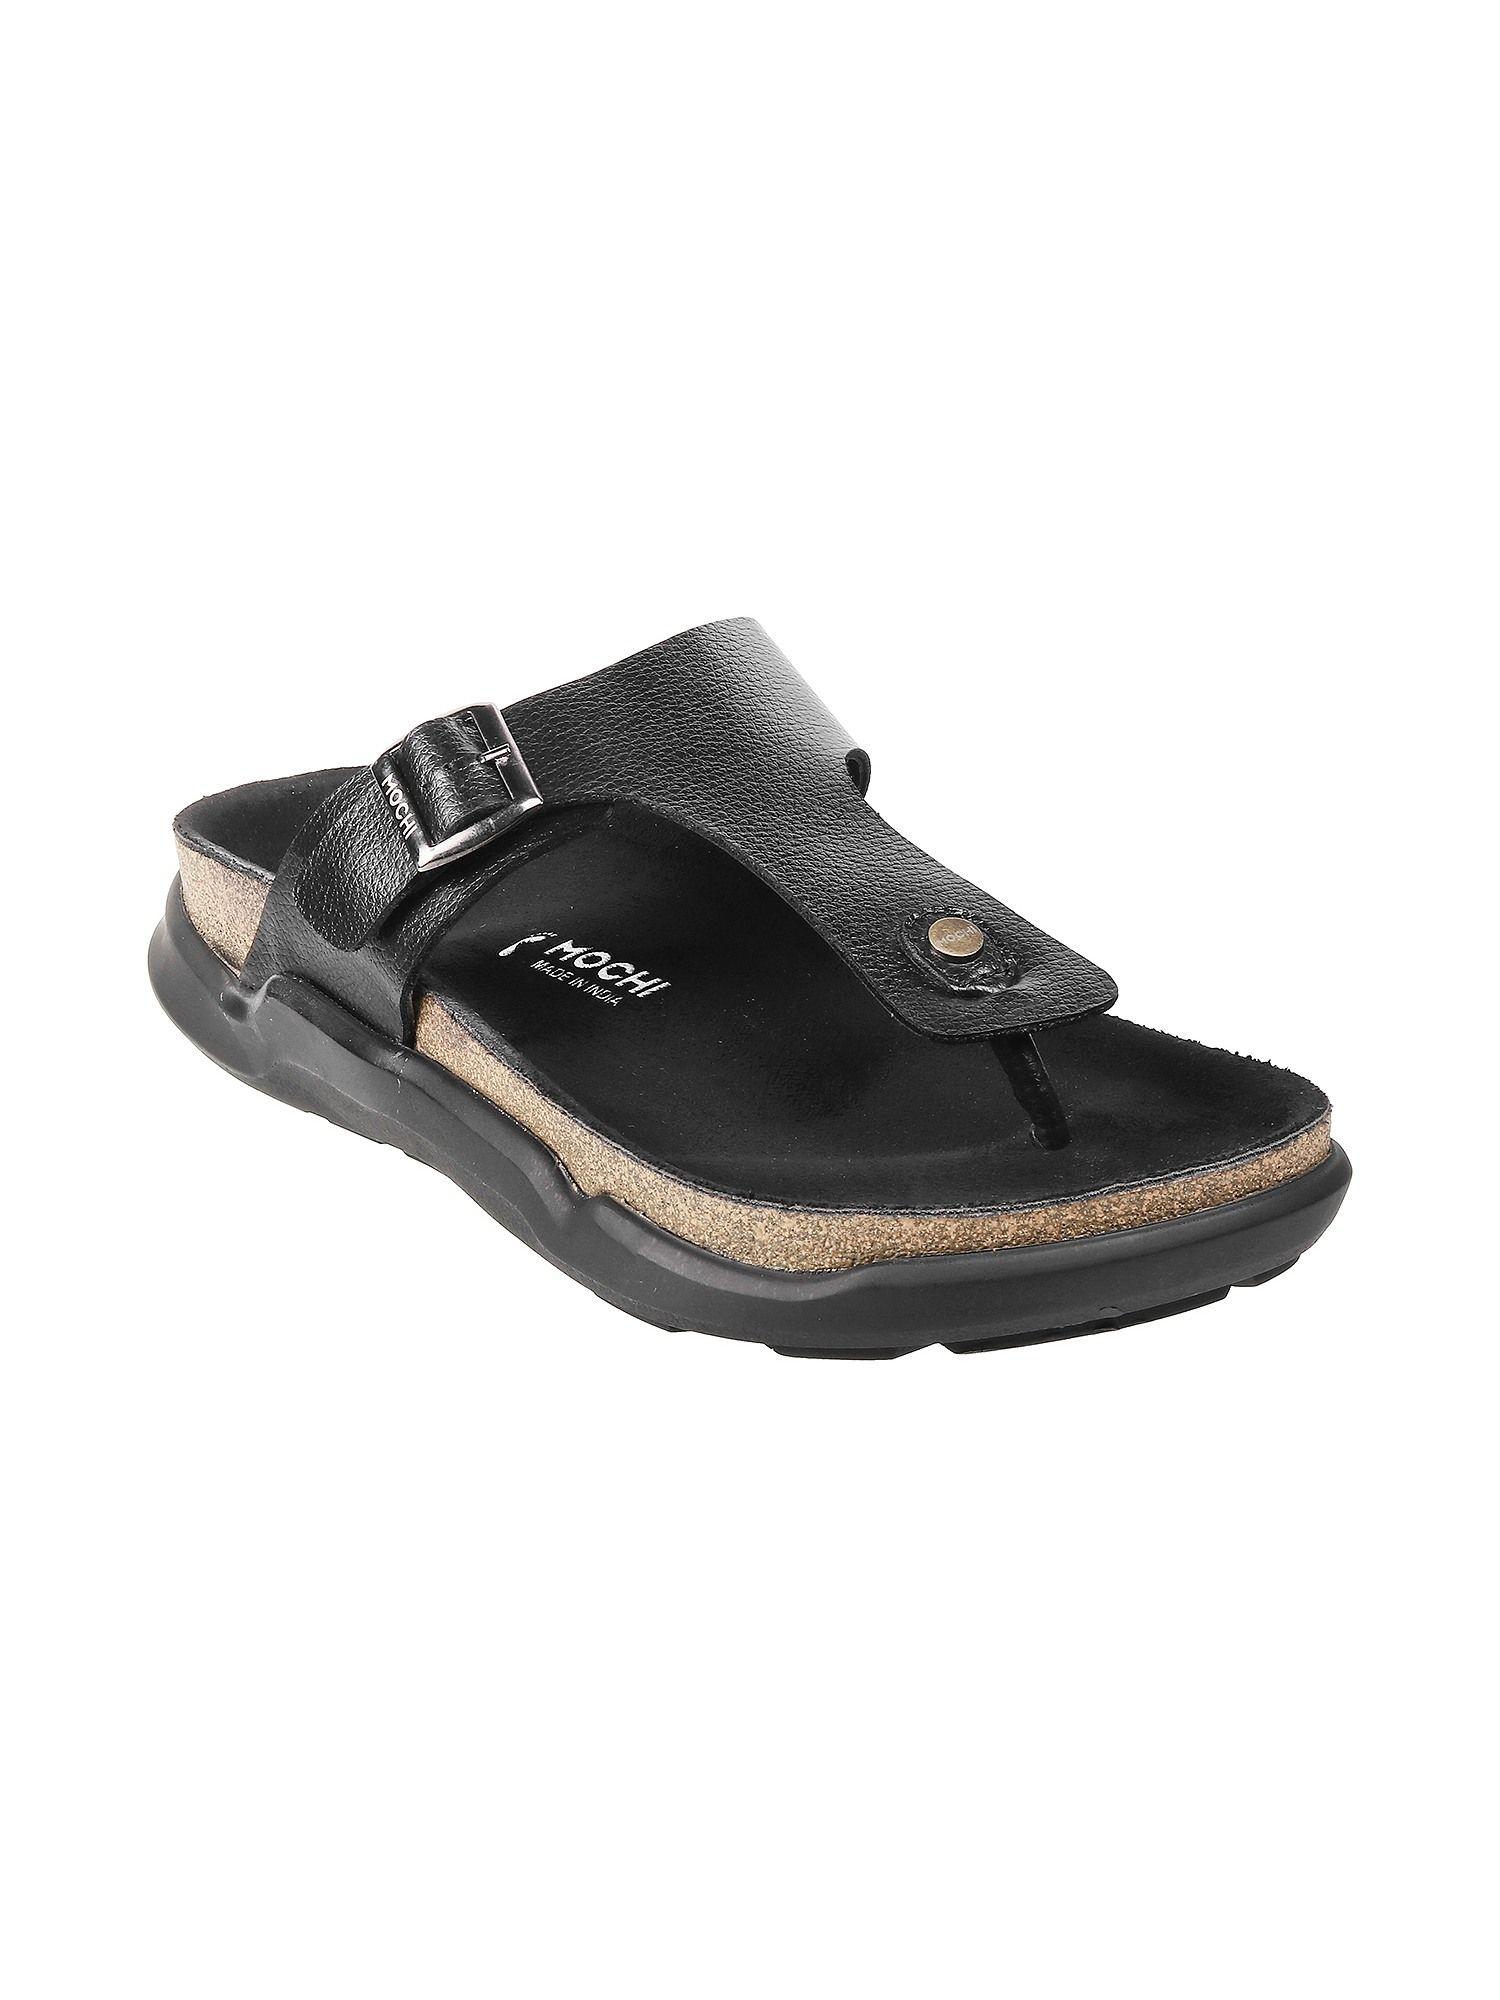 mens black flat chappalsmochi textured black sandals